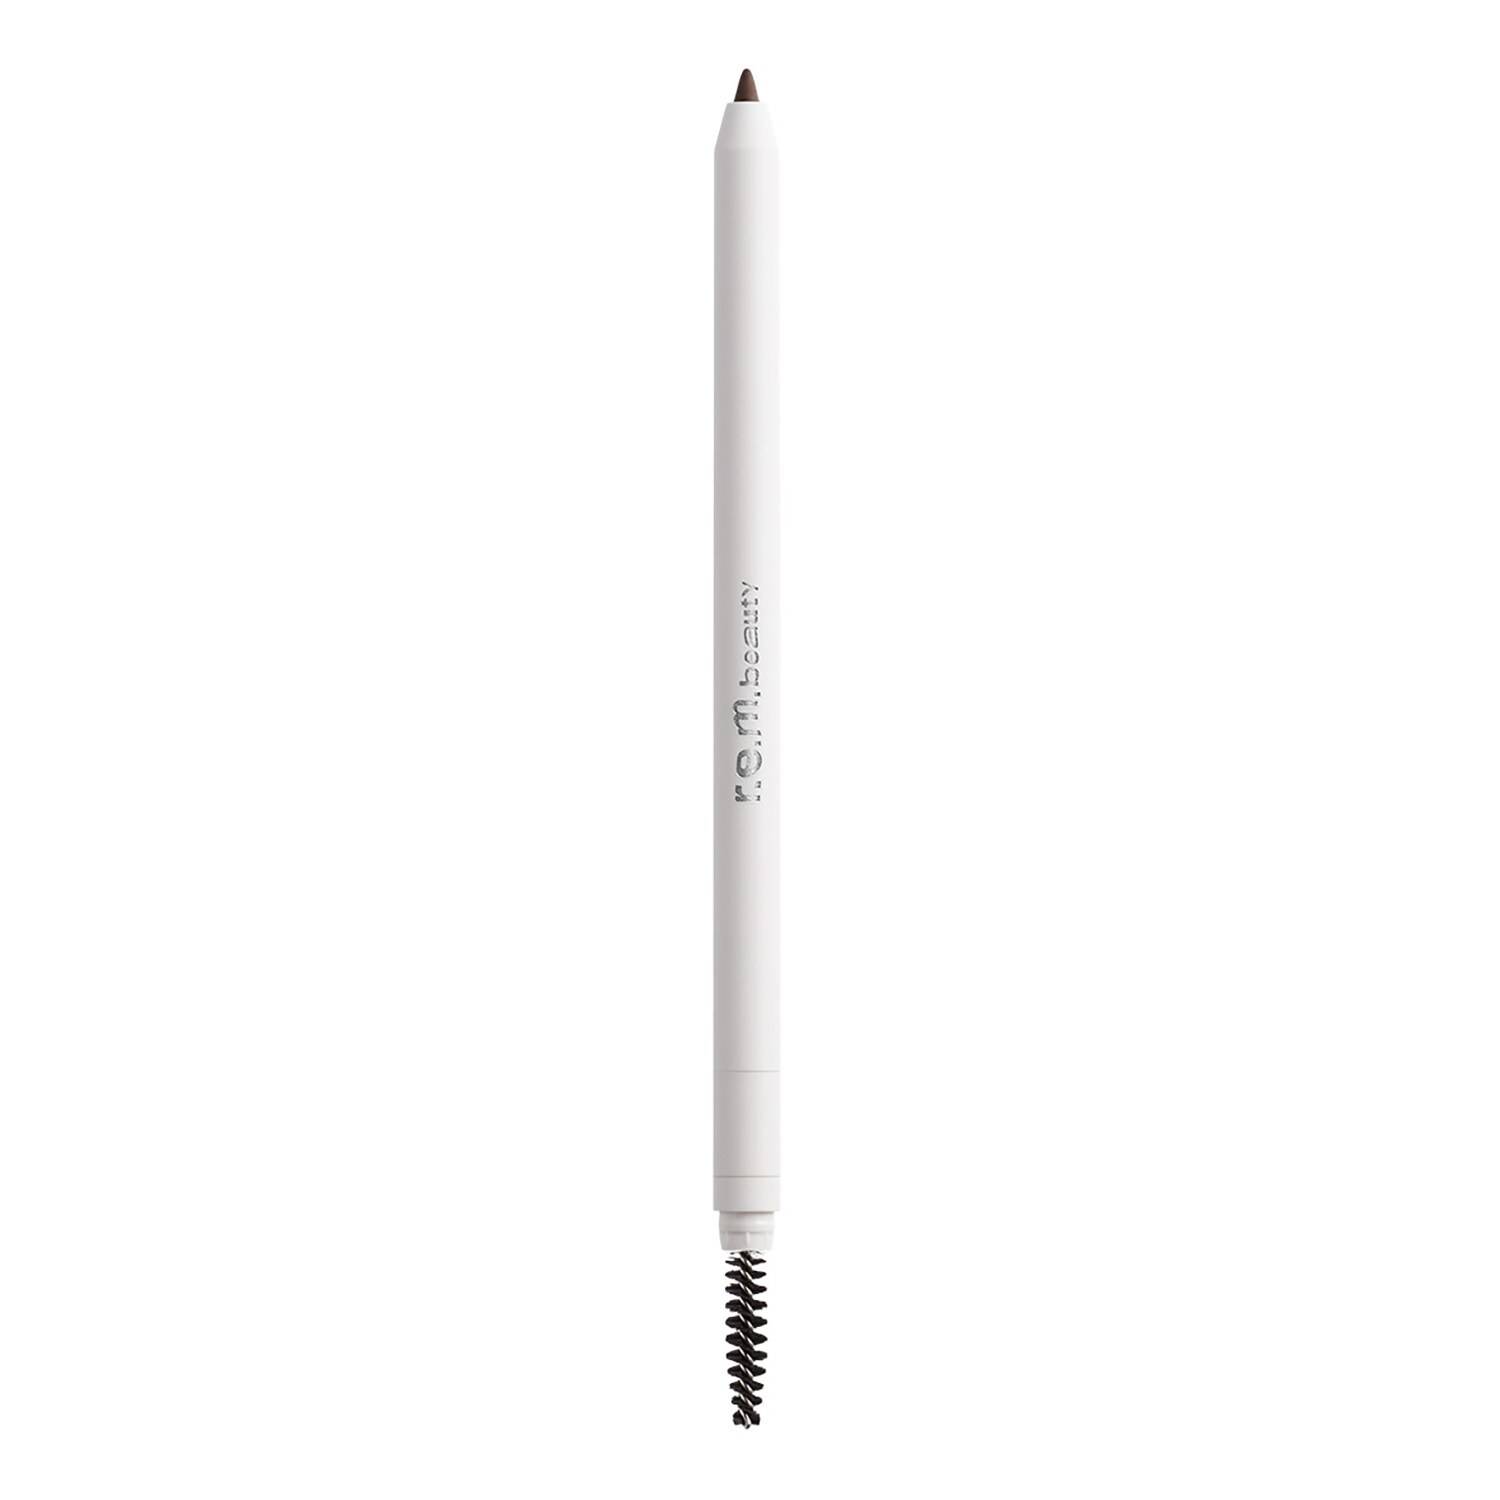 Rem Beauty Space Shape Brow Pencil 0.5G Warm Black Brown